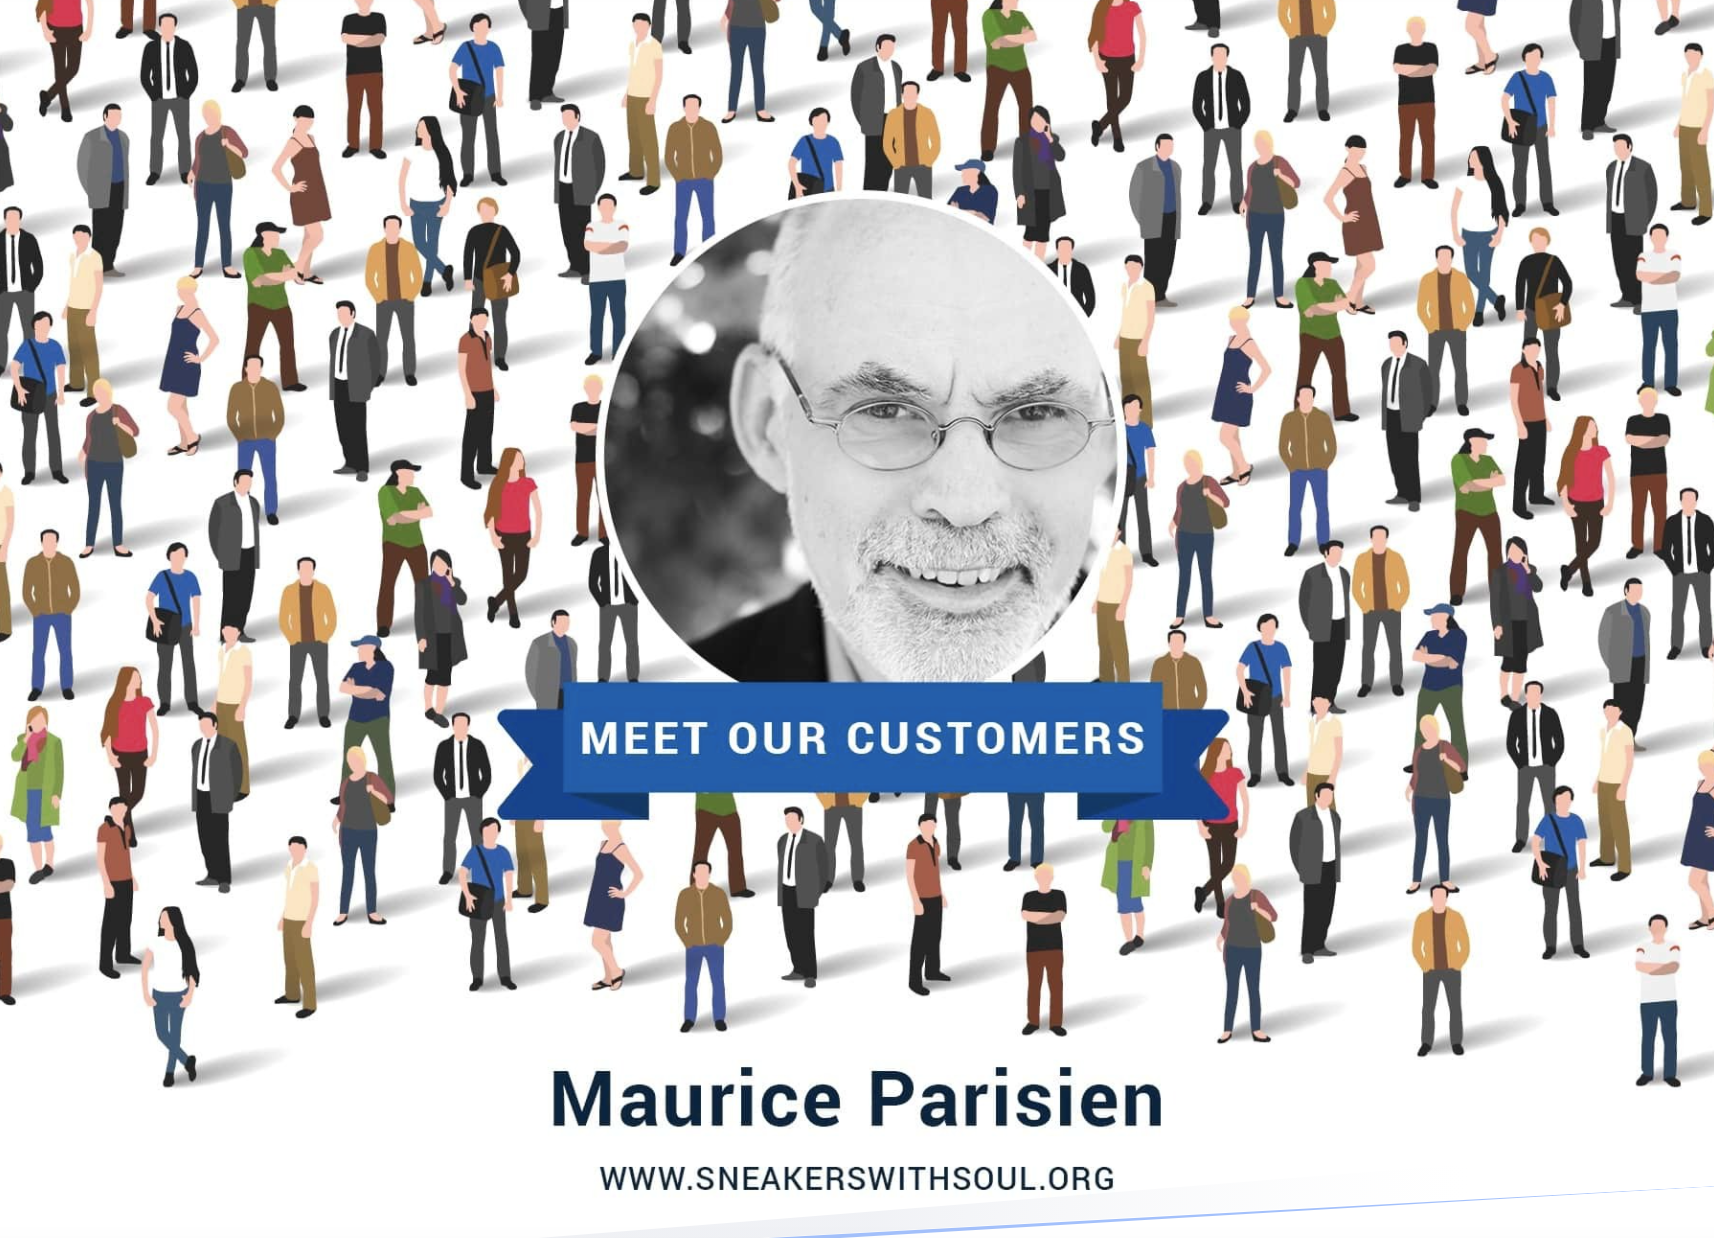 Meet Our Customers - Maurice Parisien